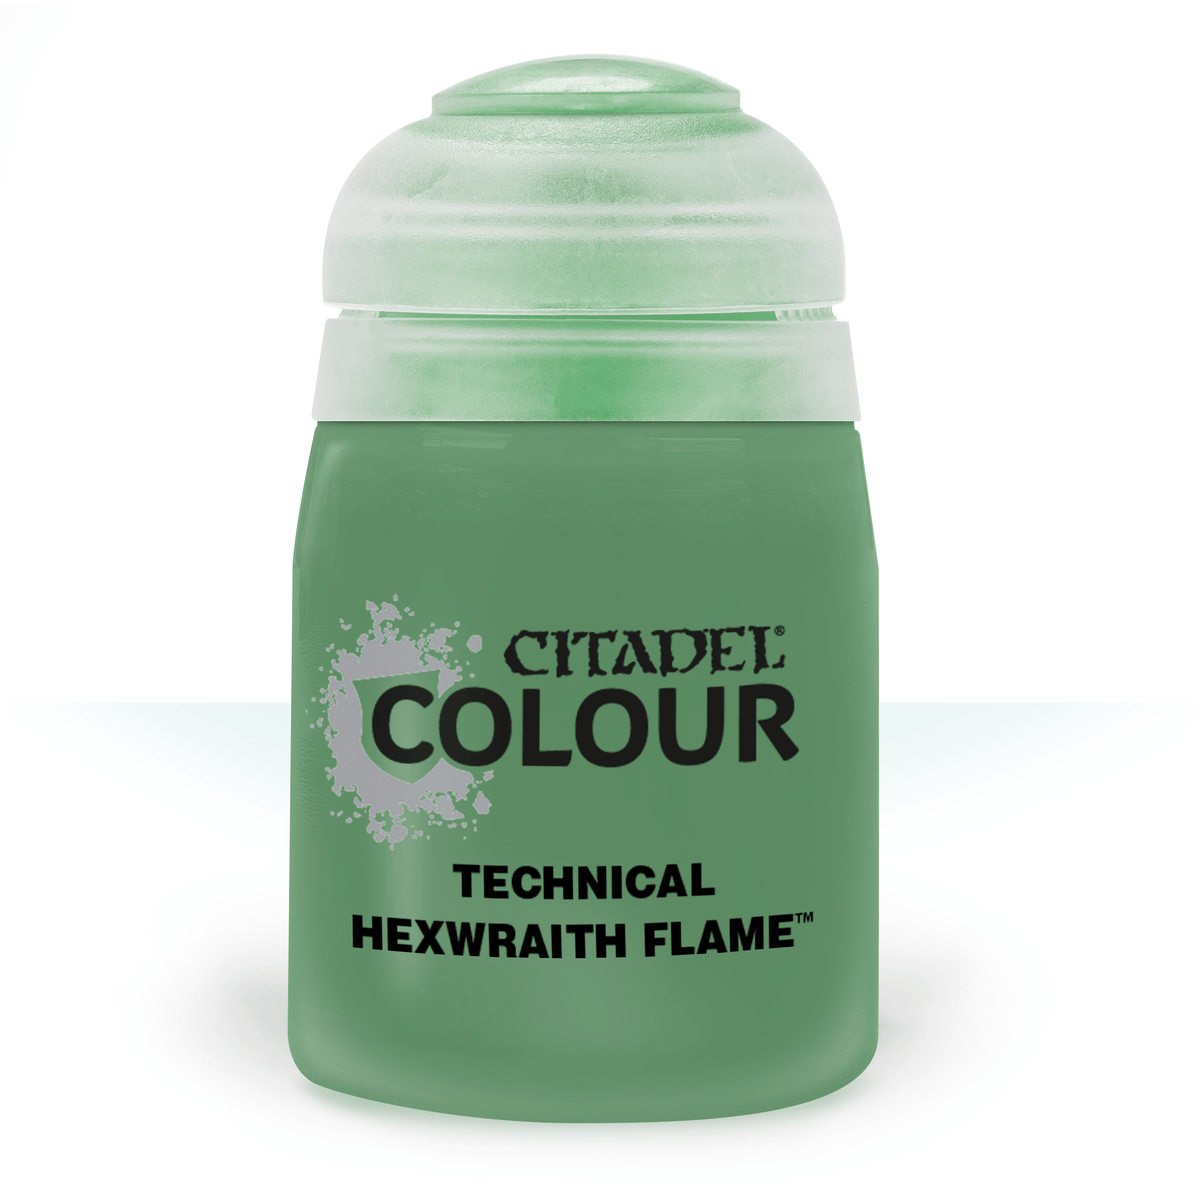 Citadel Contrast Paint: Hexwraith Flame (18ml)